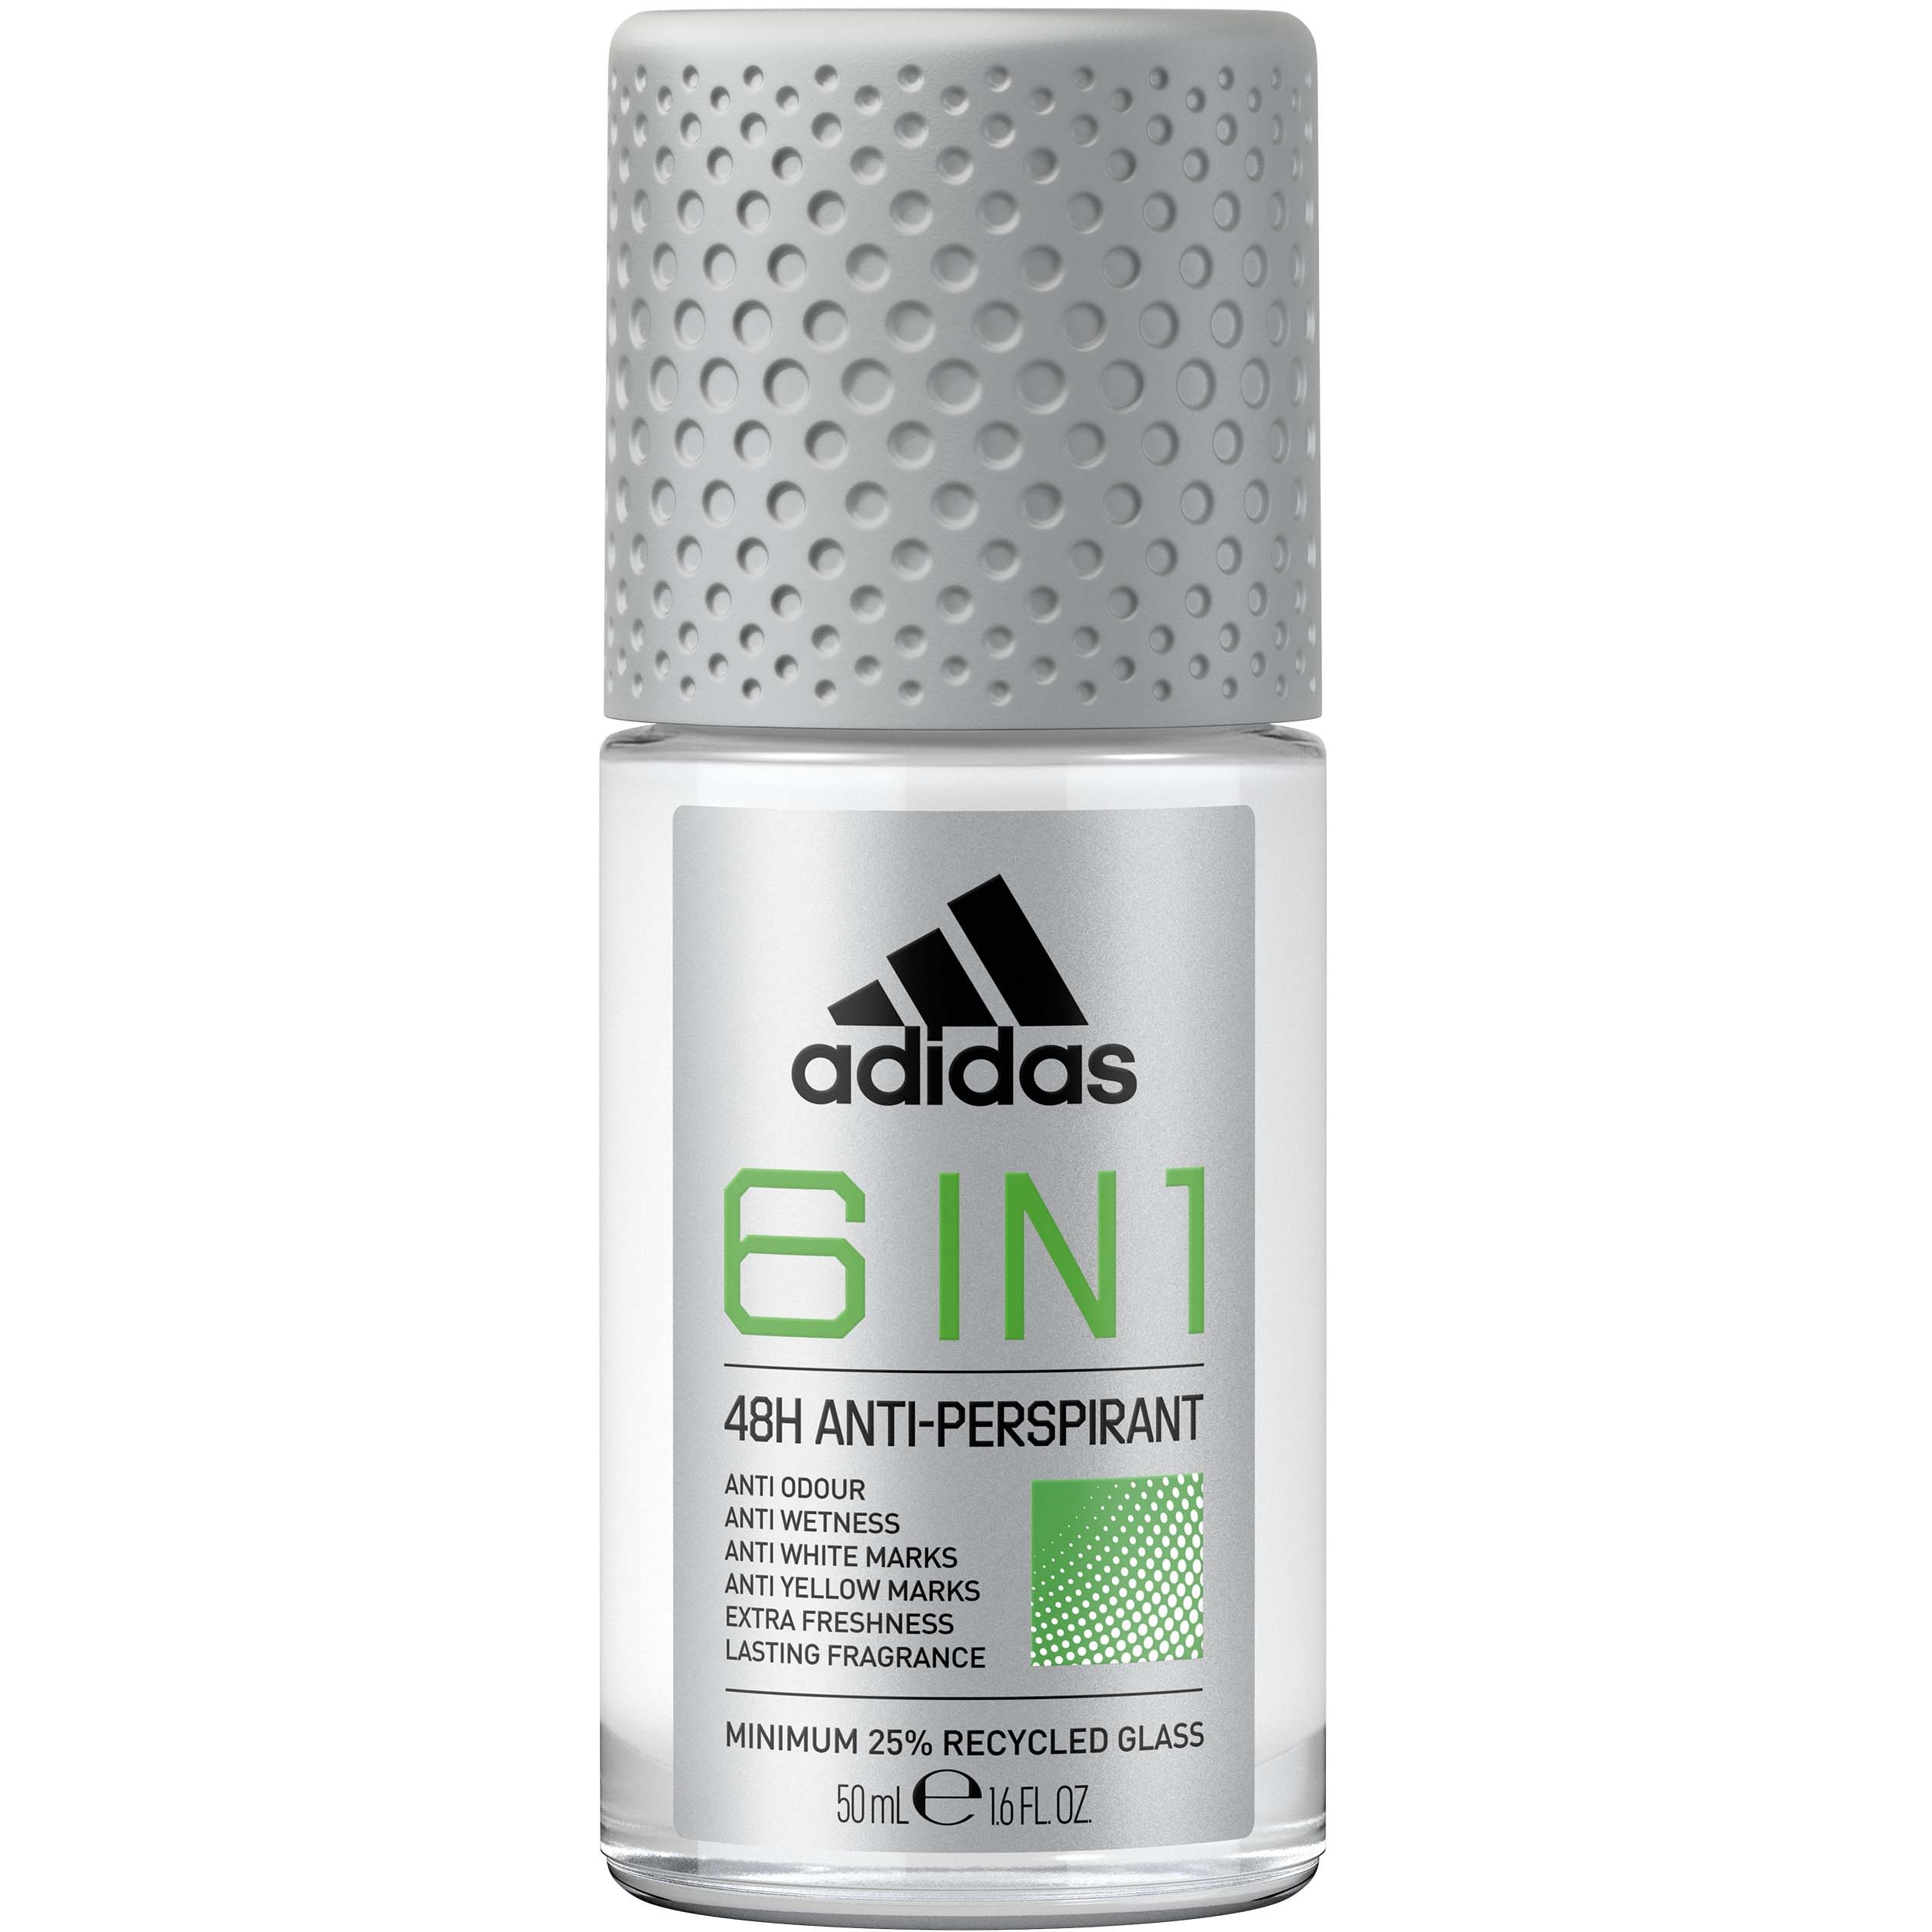 Adidas Cool & Dry 6 In 1 Roll-on deodorant 50 ml